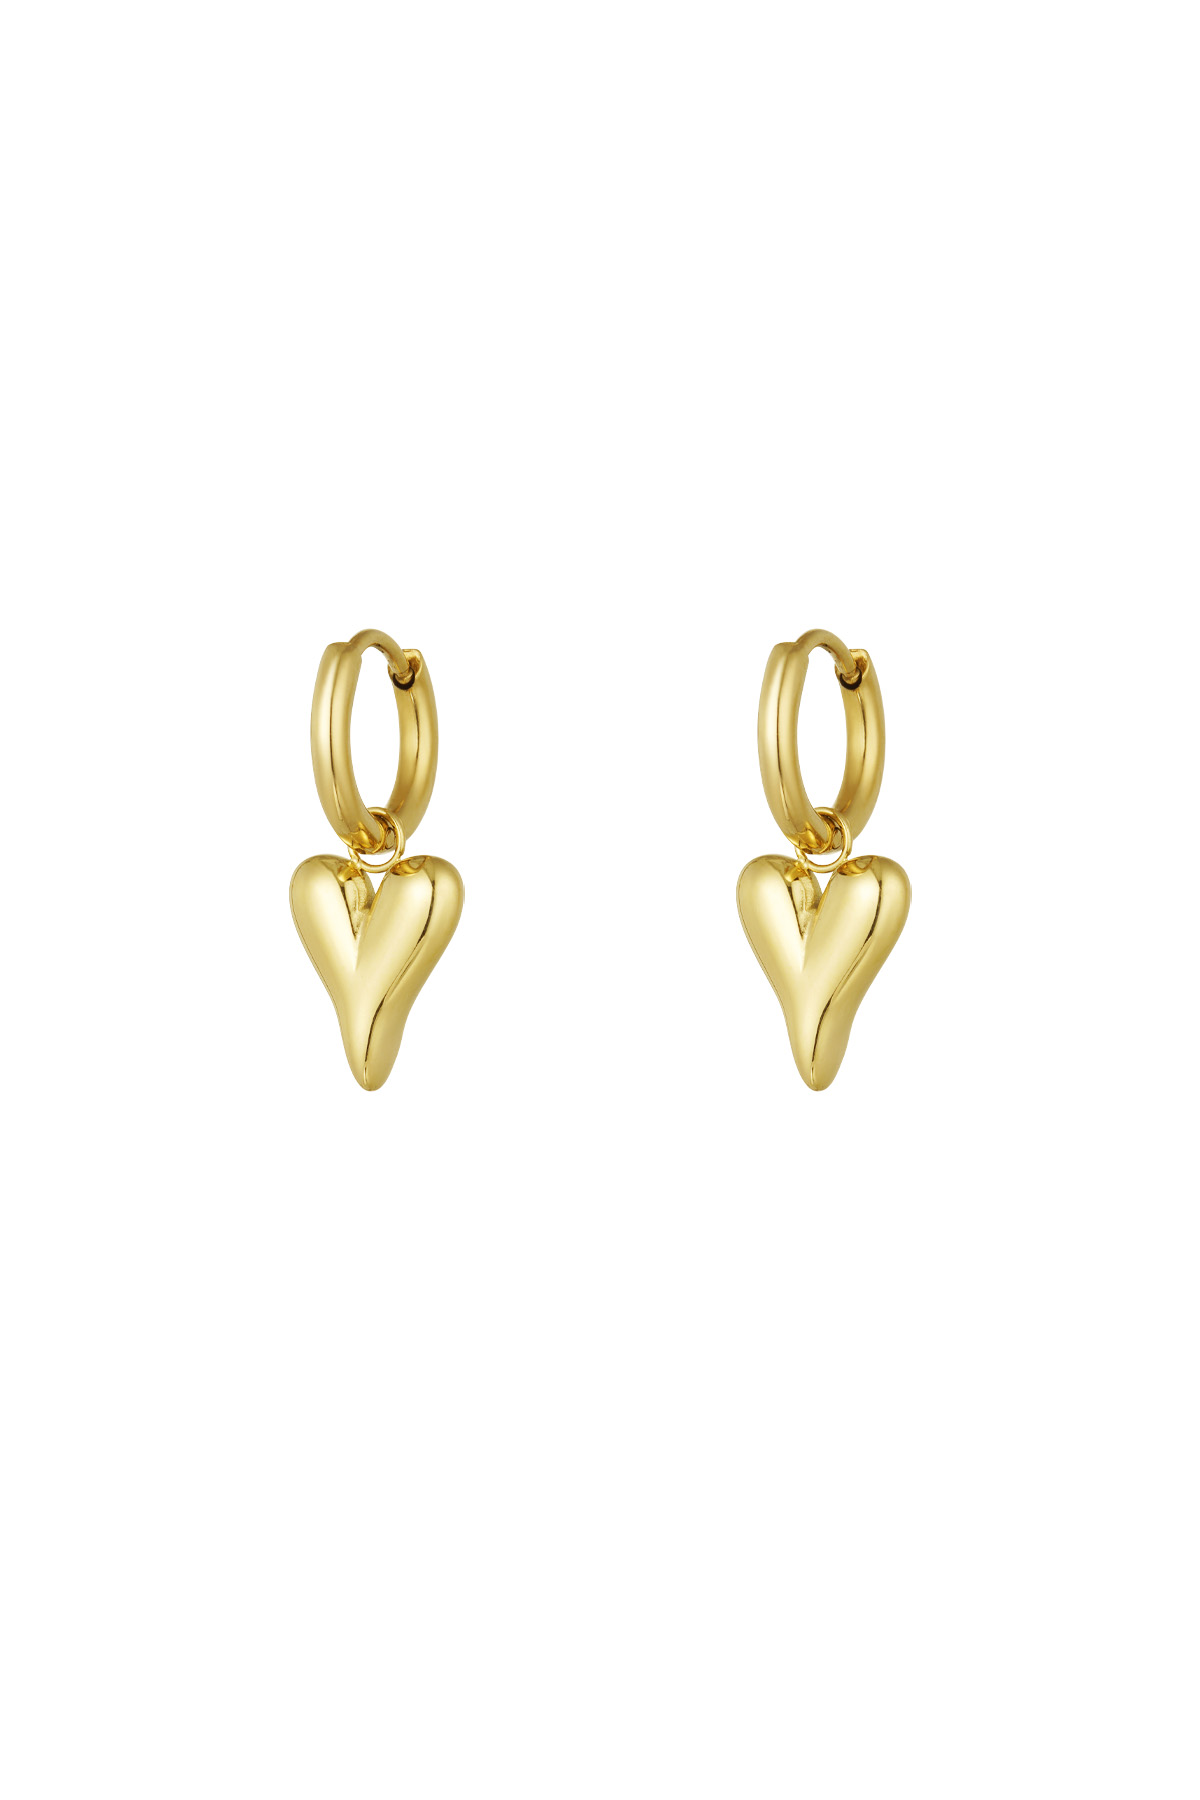 Stainless Steel Heart Shaped Earrings - Gold